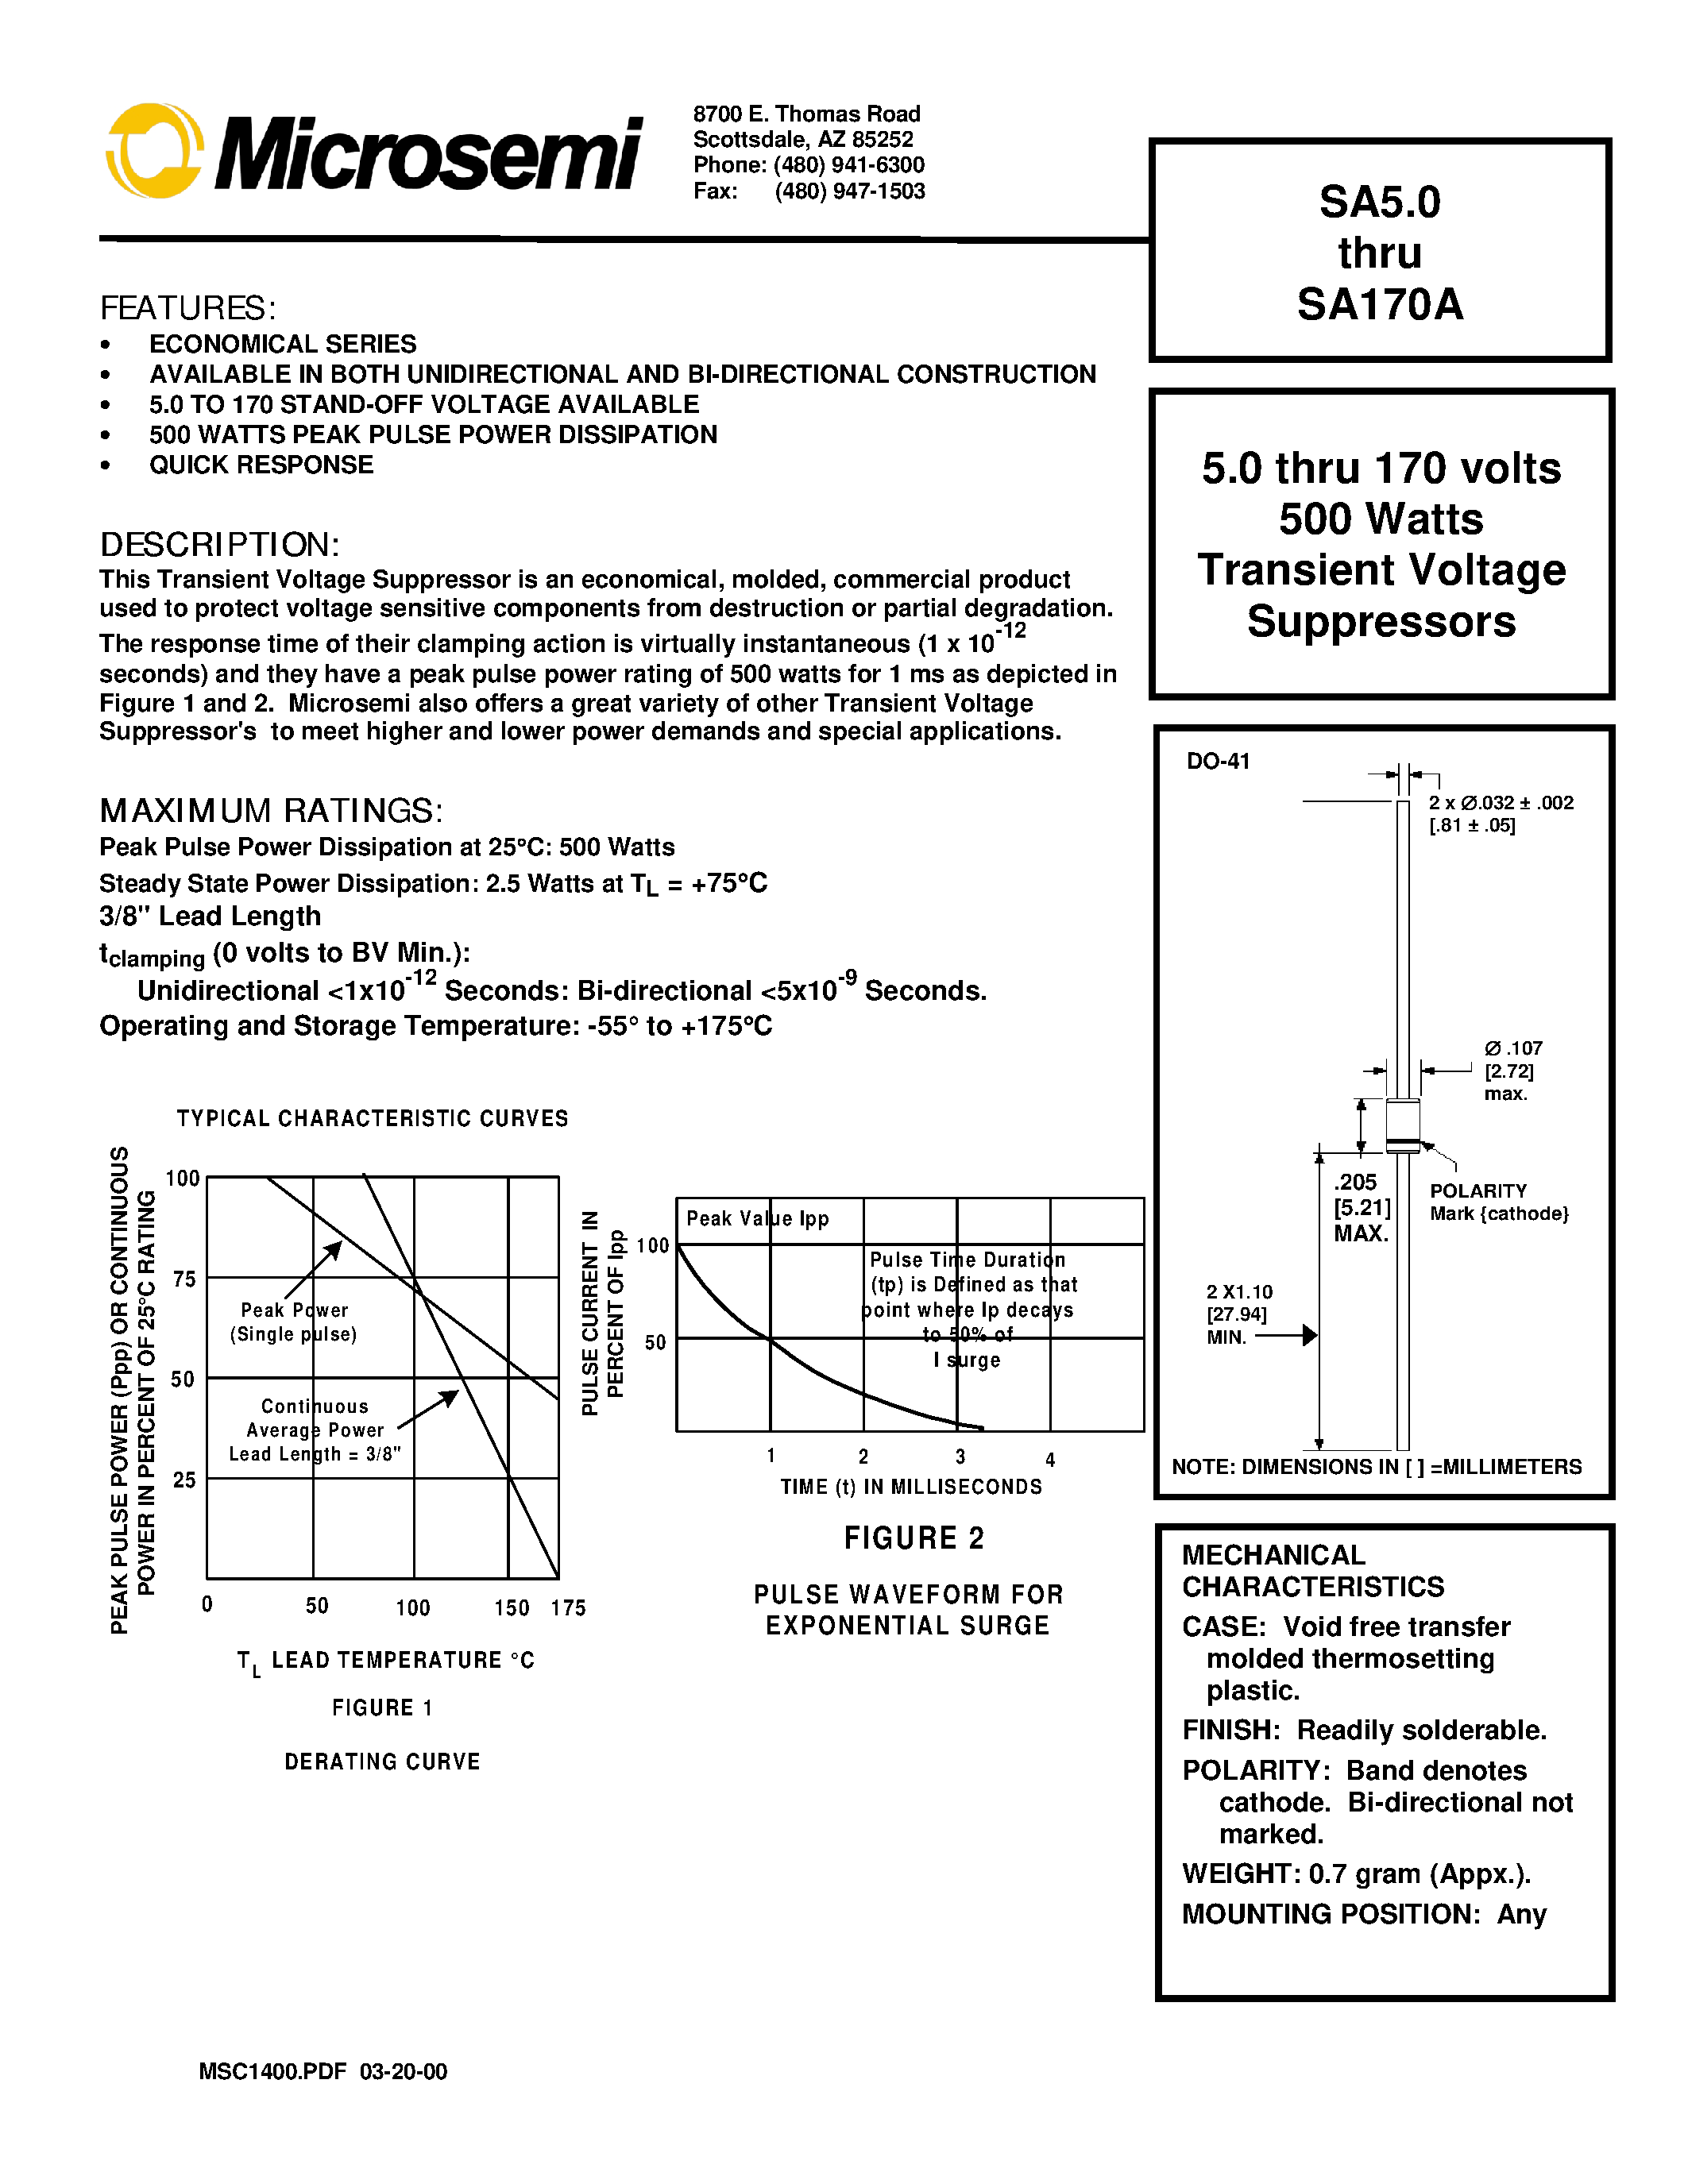 Datasheet SA30A - 5.0 thru 170 volts 500 Watts Transient Voltage Suppressors page 1